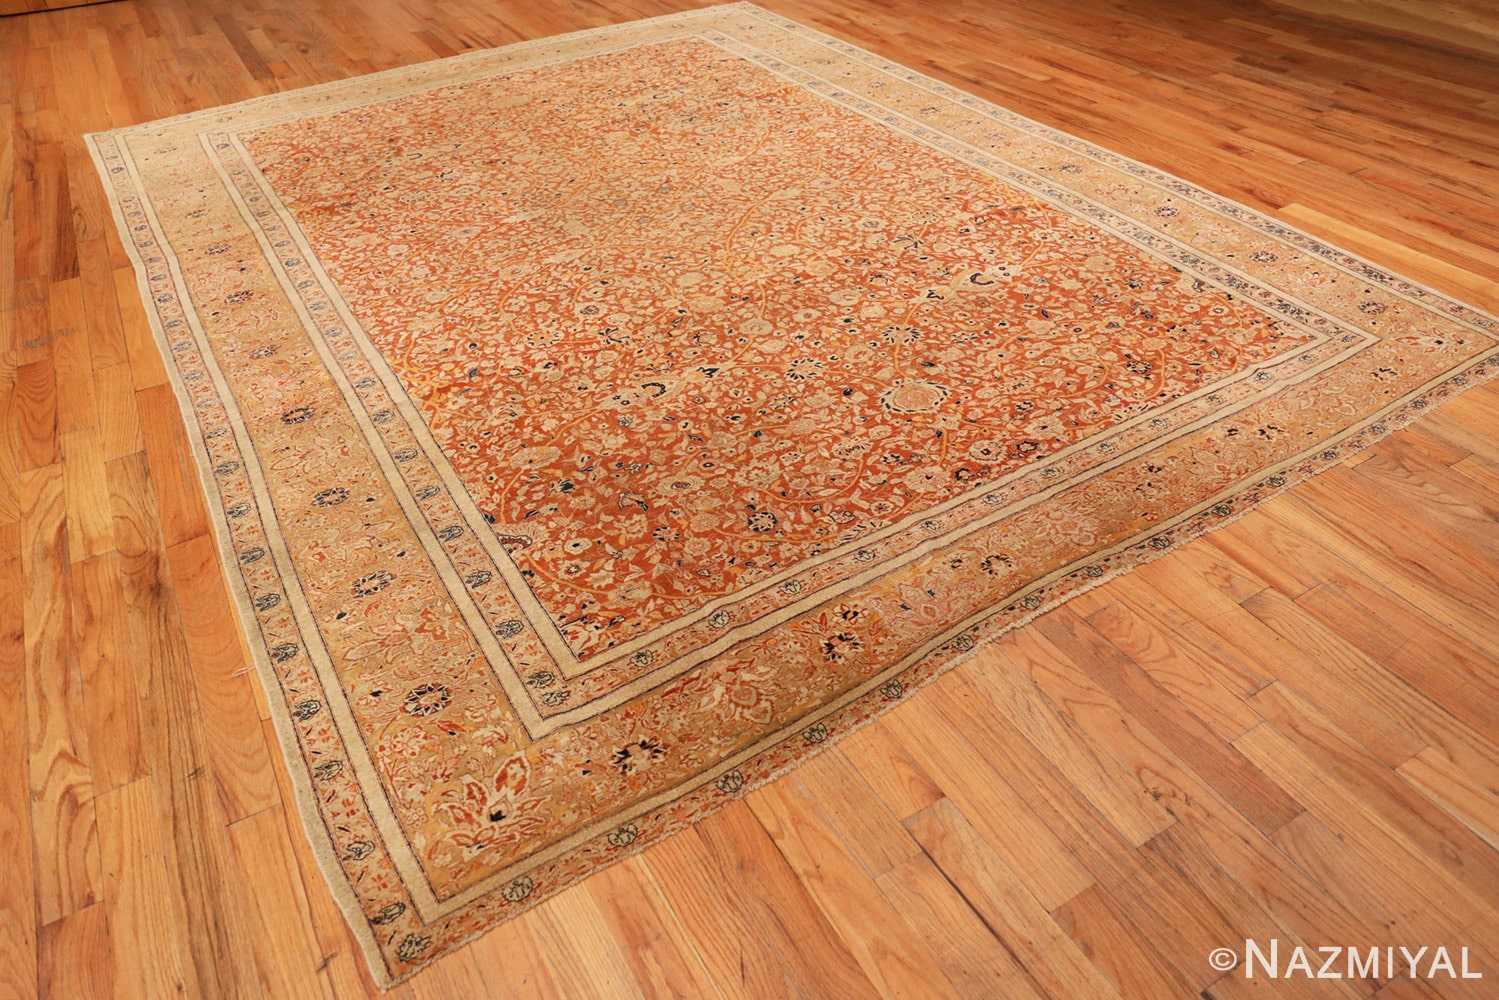 Full Antique Persian Tabriz rug 47574 by Nazmiyal